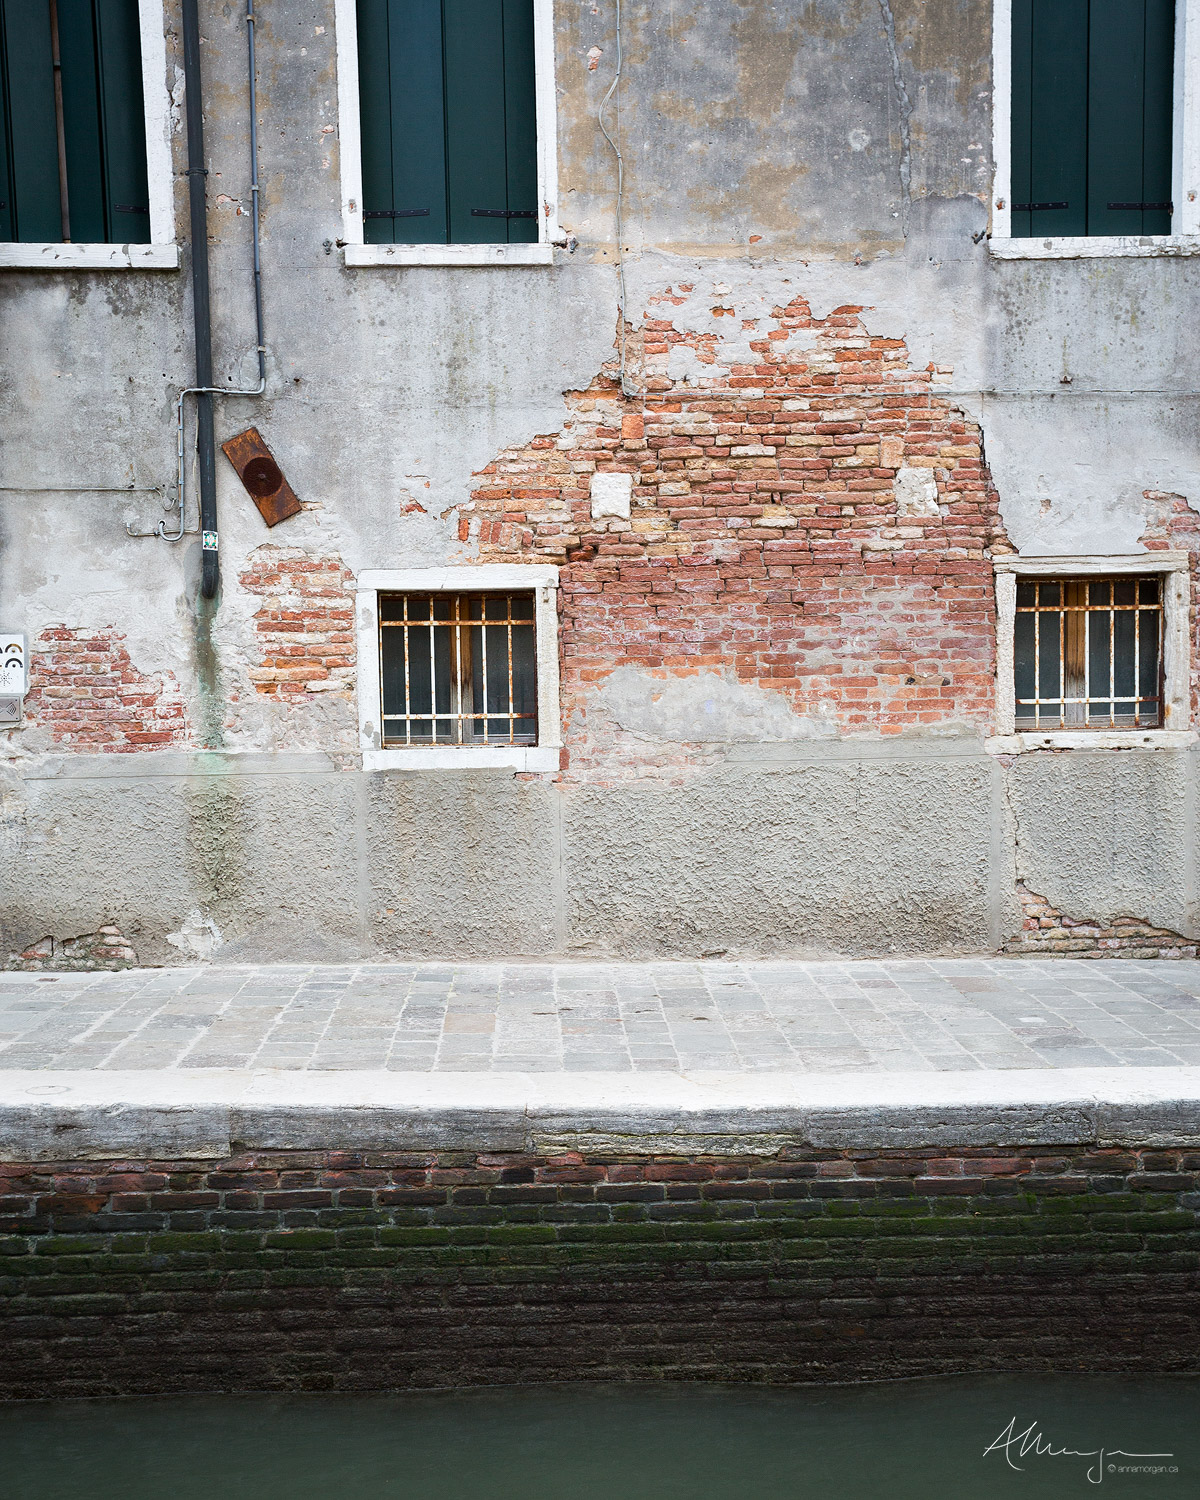 The crumbling exterior of a Venetian building 